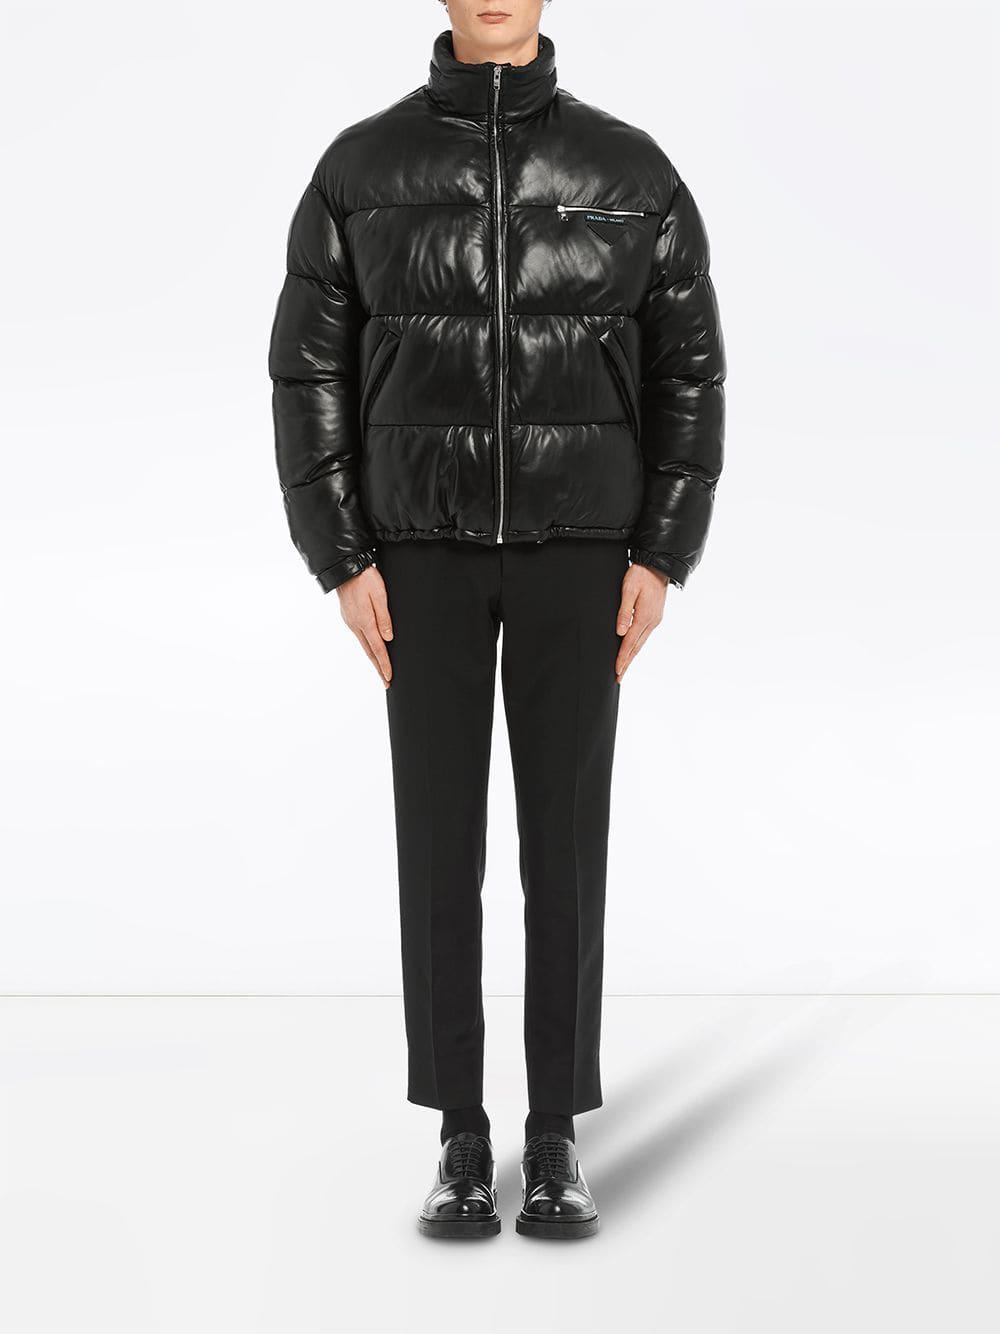 Prada Nappa Leather Puffer Jacket in Black for Men - Lyst